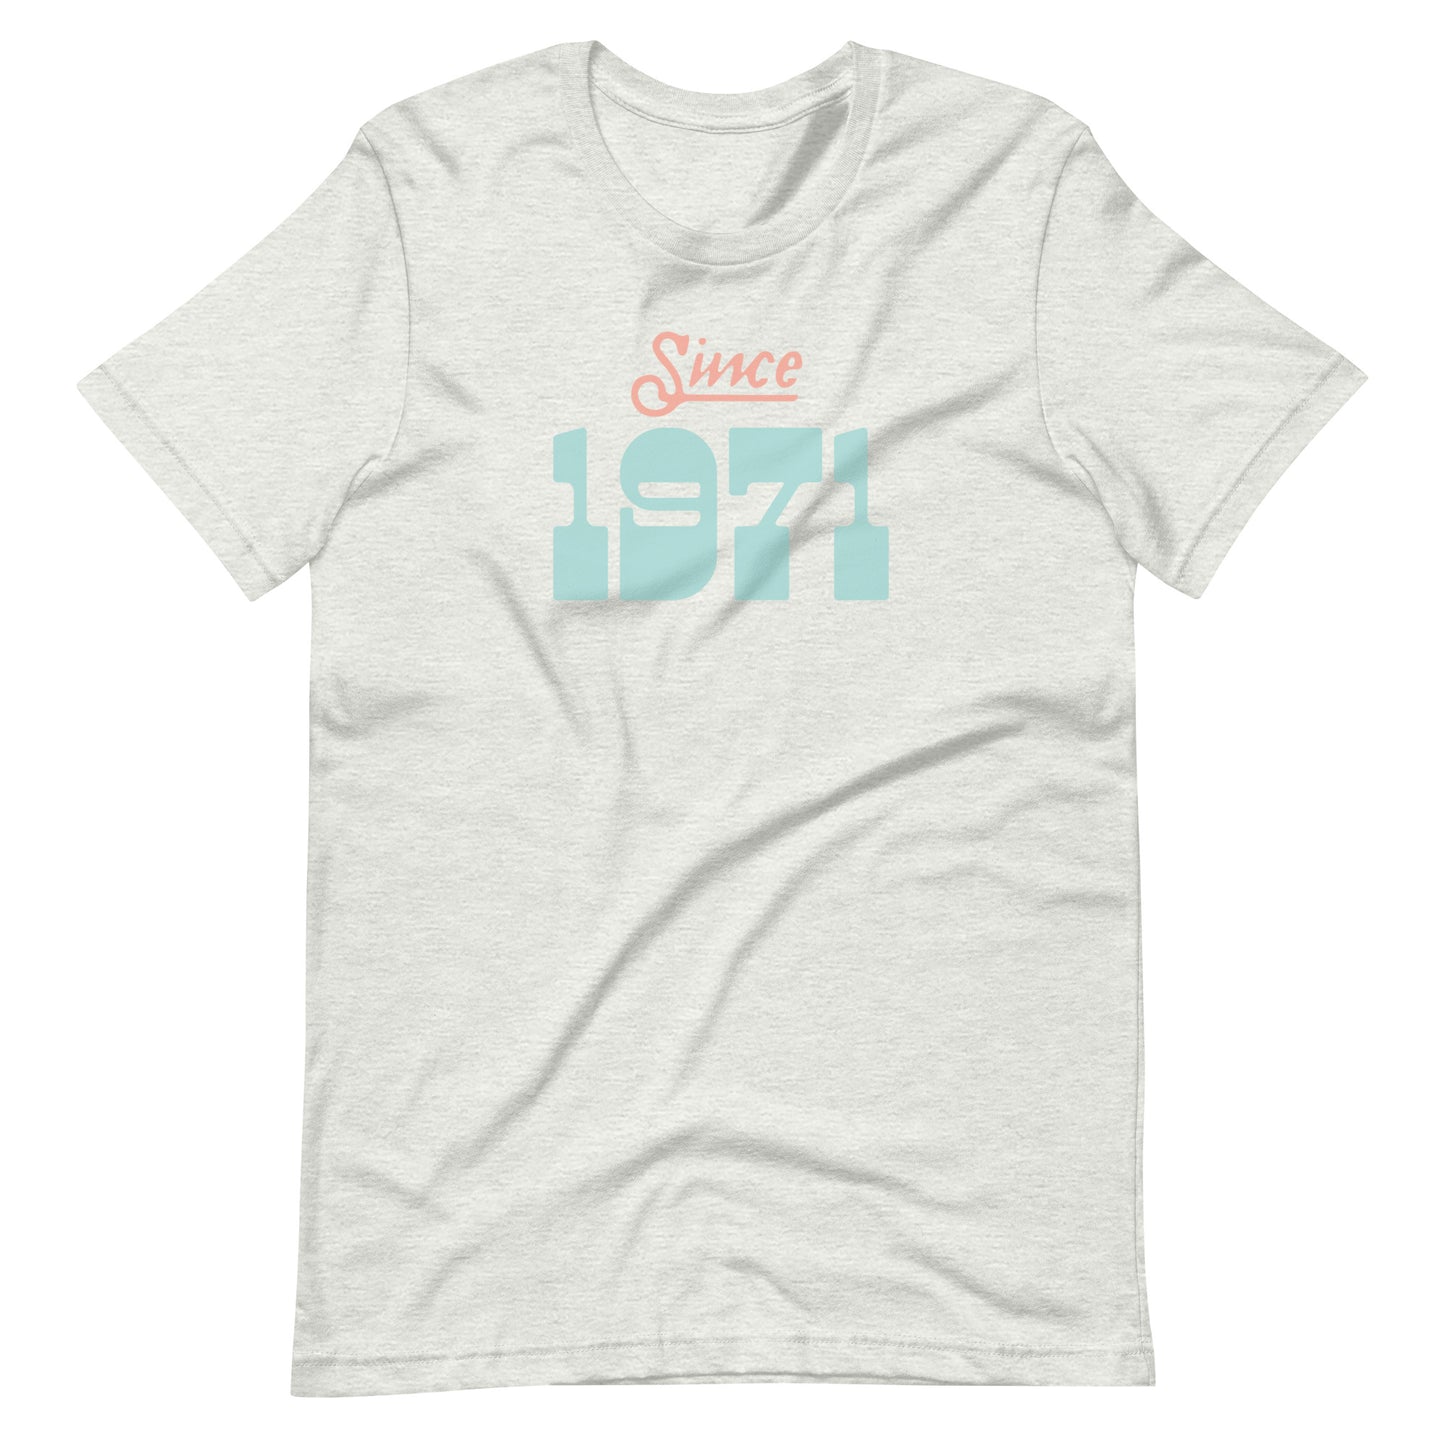 Pixie Dust Collection - Since 1971 Unisex T-Shirt (more colors available)